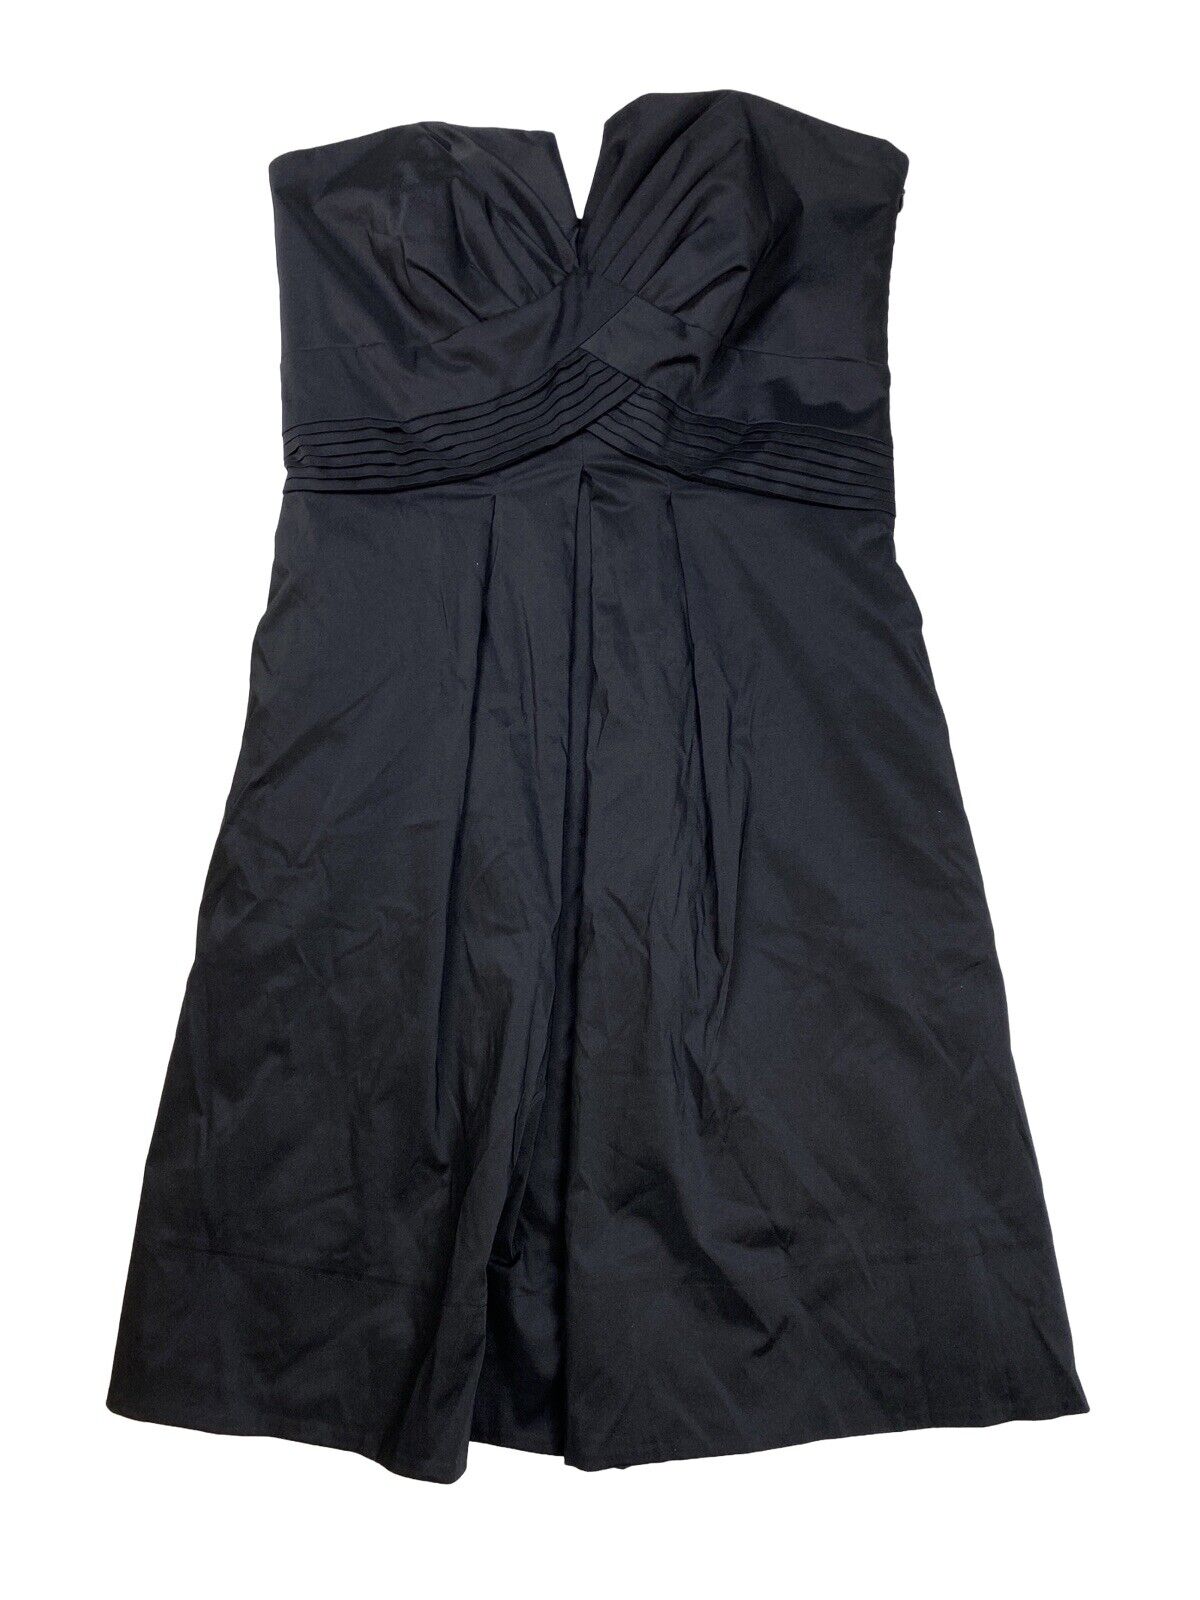 White House Black Market Women's Black Strapless A-Line Dress - 6